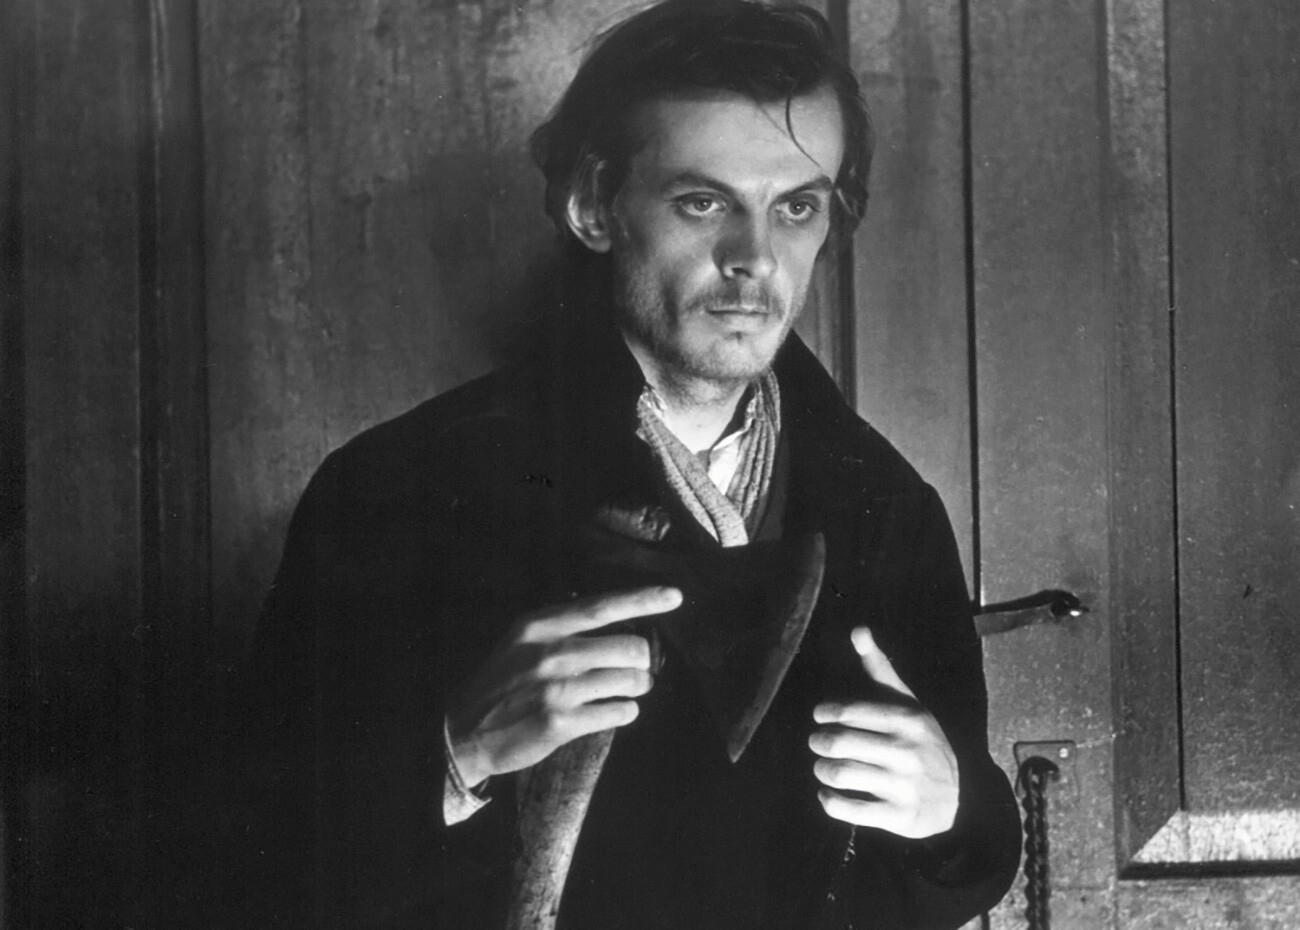 Fermo immagine dal film sovietico del 1969 “Prestuplenie i nakazanie” (“Delitto e castigo”). A interpretare Raskolnikov era l’attore Georgij Taratorkin